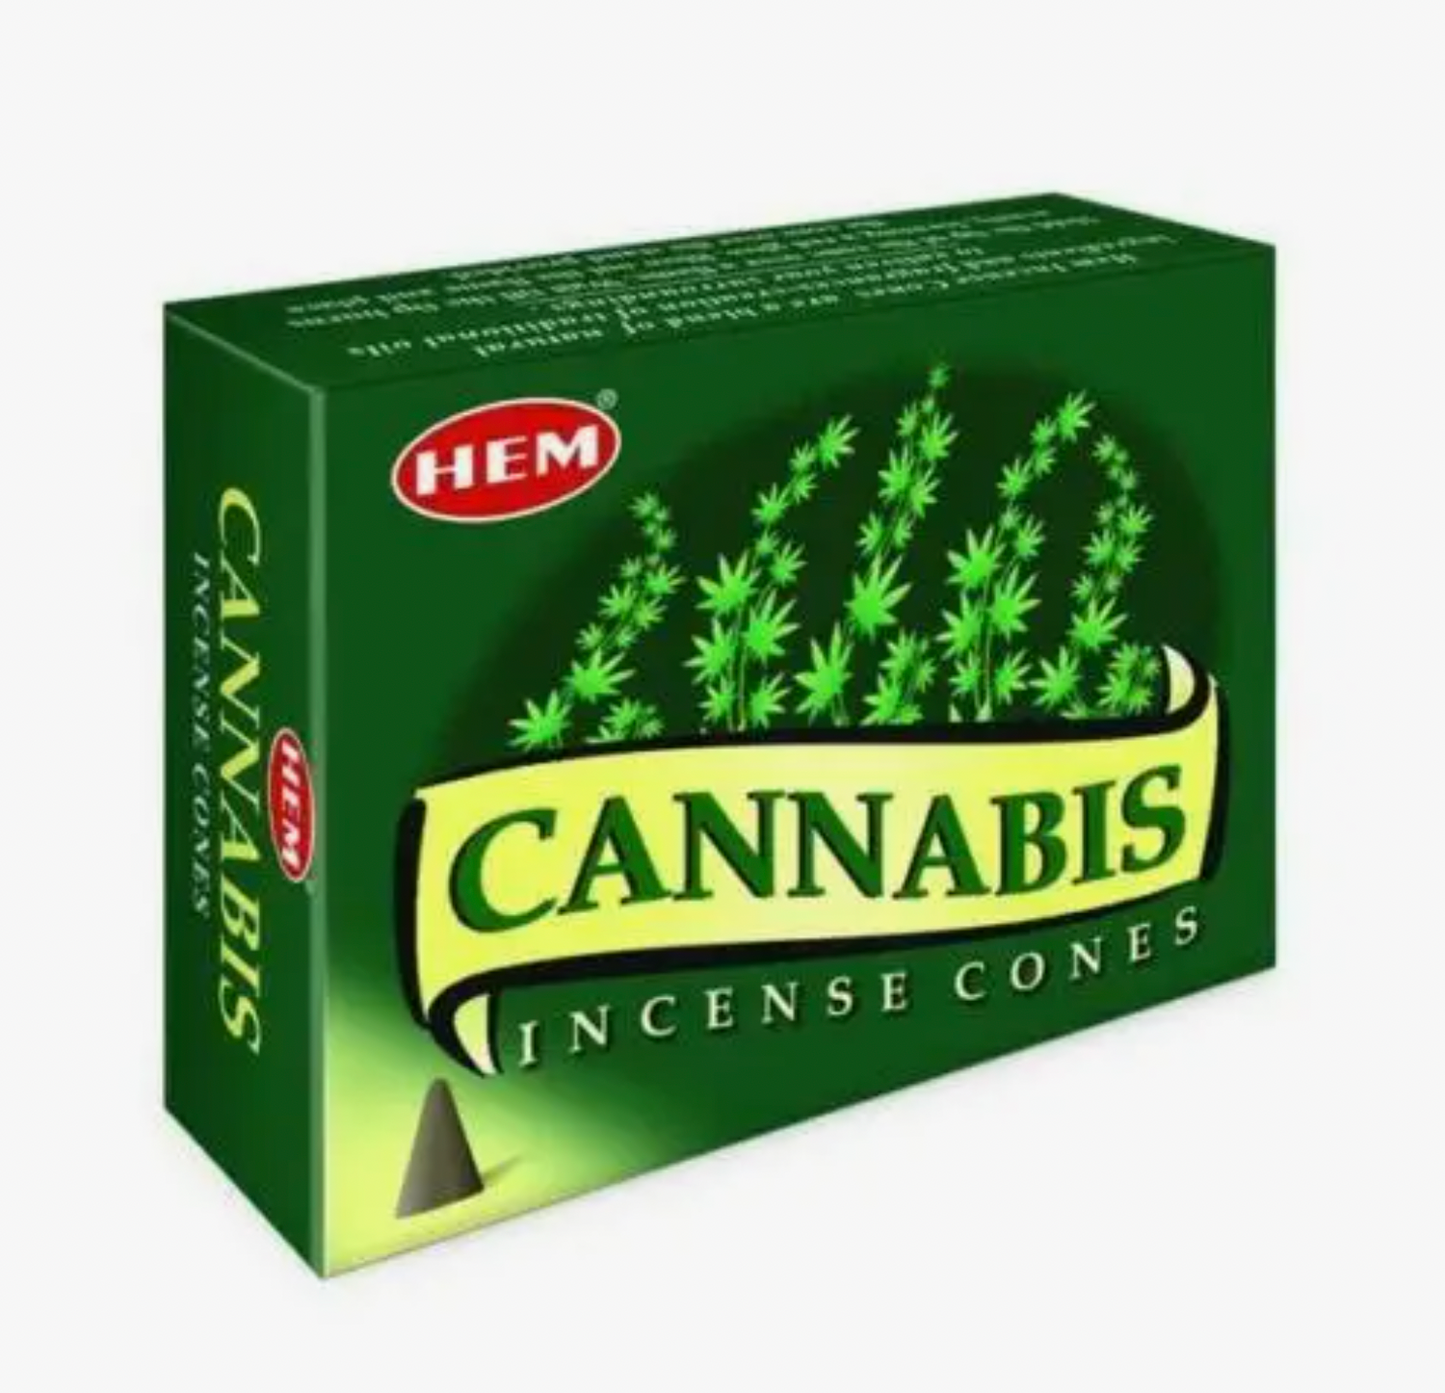 Cannabis Hem Incense Cones